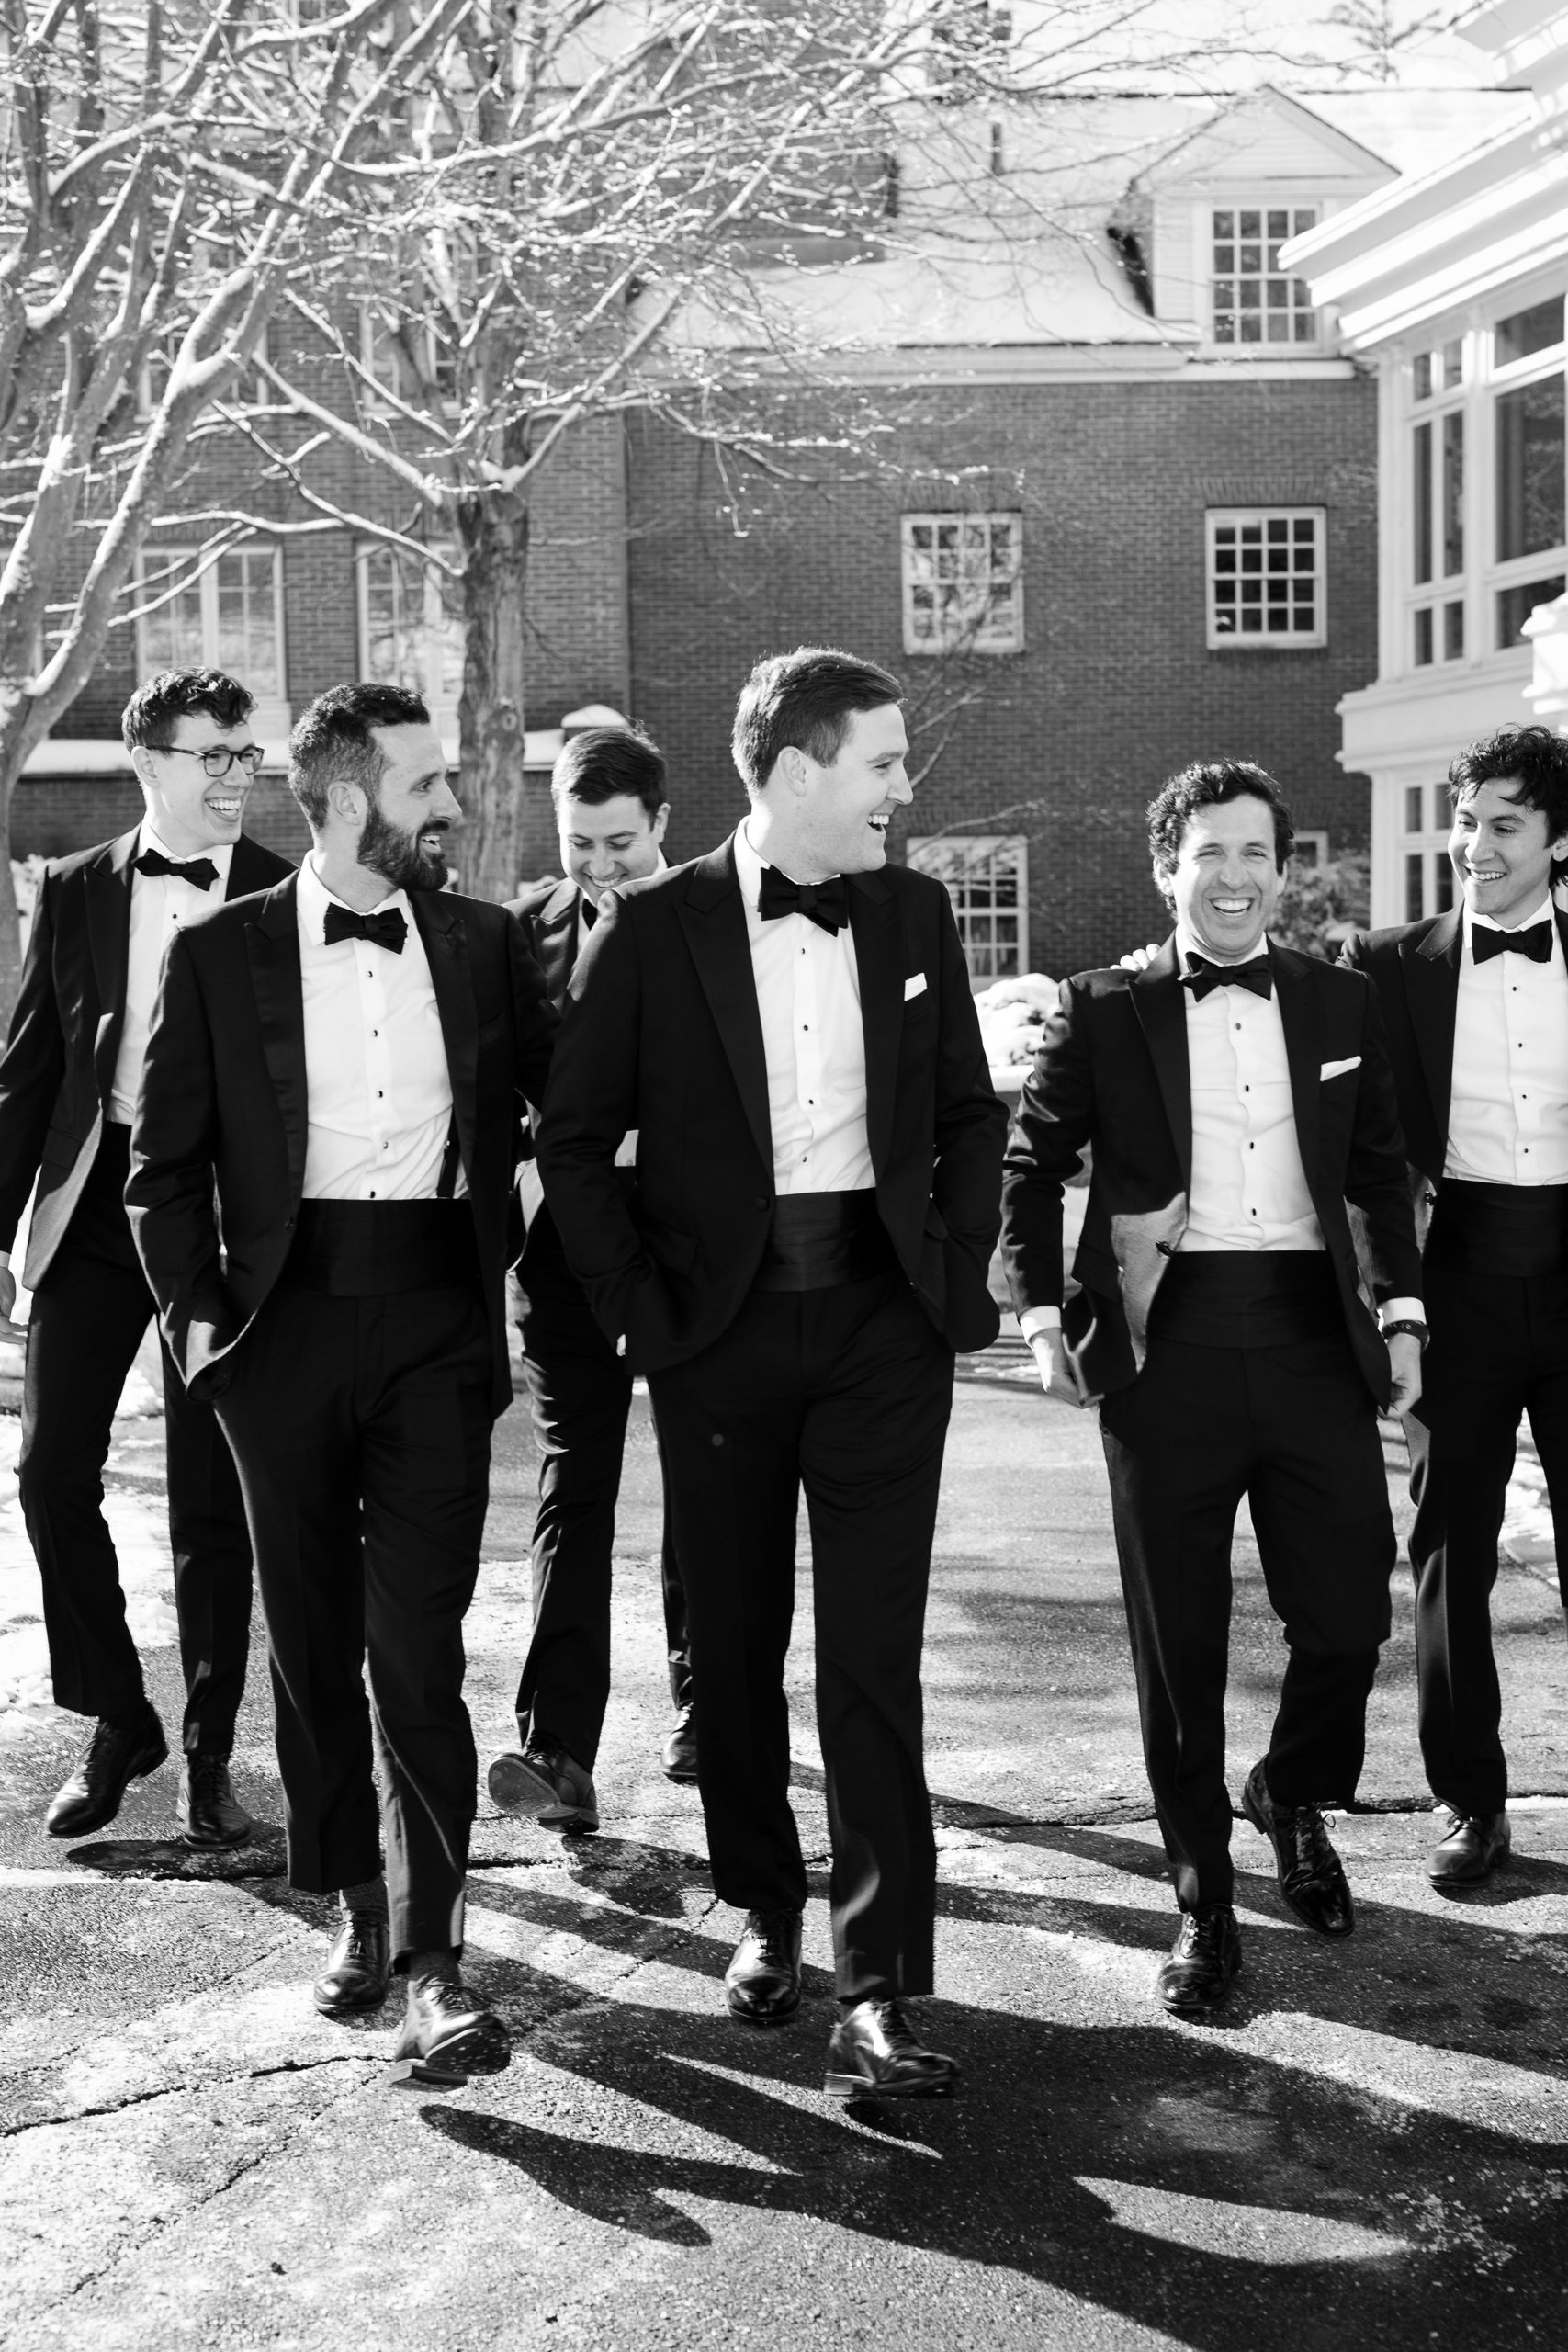 Groom and groomsmen in tuxedos for winter wedding 